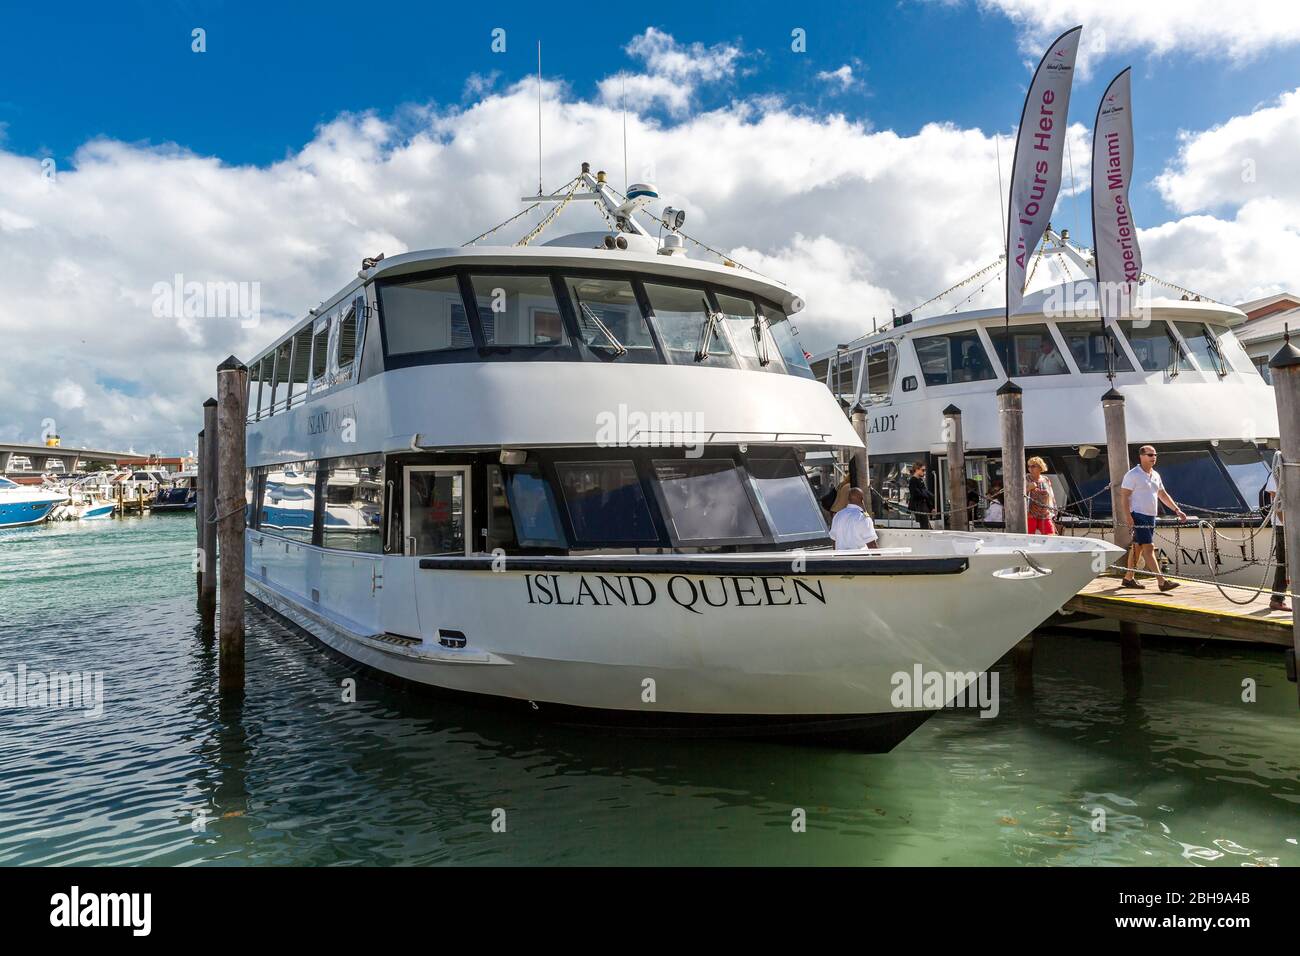 Tourboat Island Queen, Bayside Marketplace, Miamarina, Biscayne Boulevard, Downtown, Miami, Miami-Dade County, Florida, États-Unis, Amérique du Nord Banque D'Images